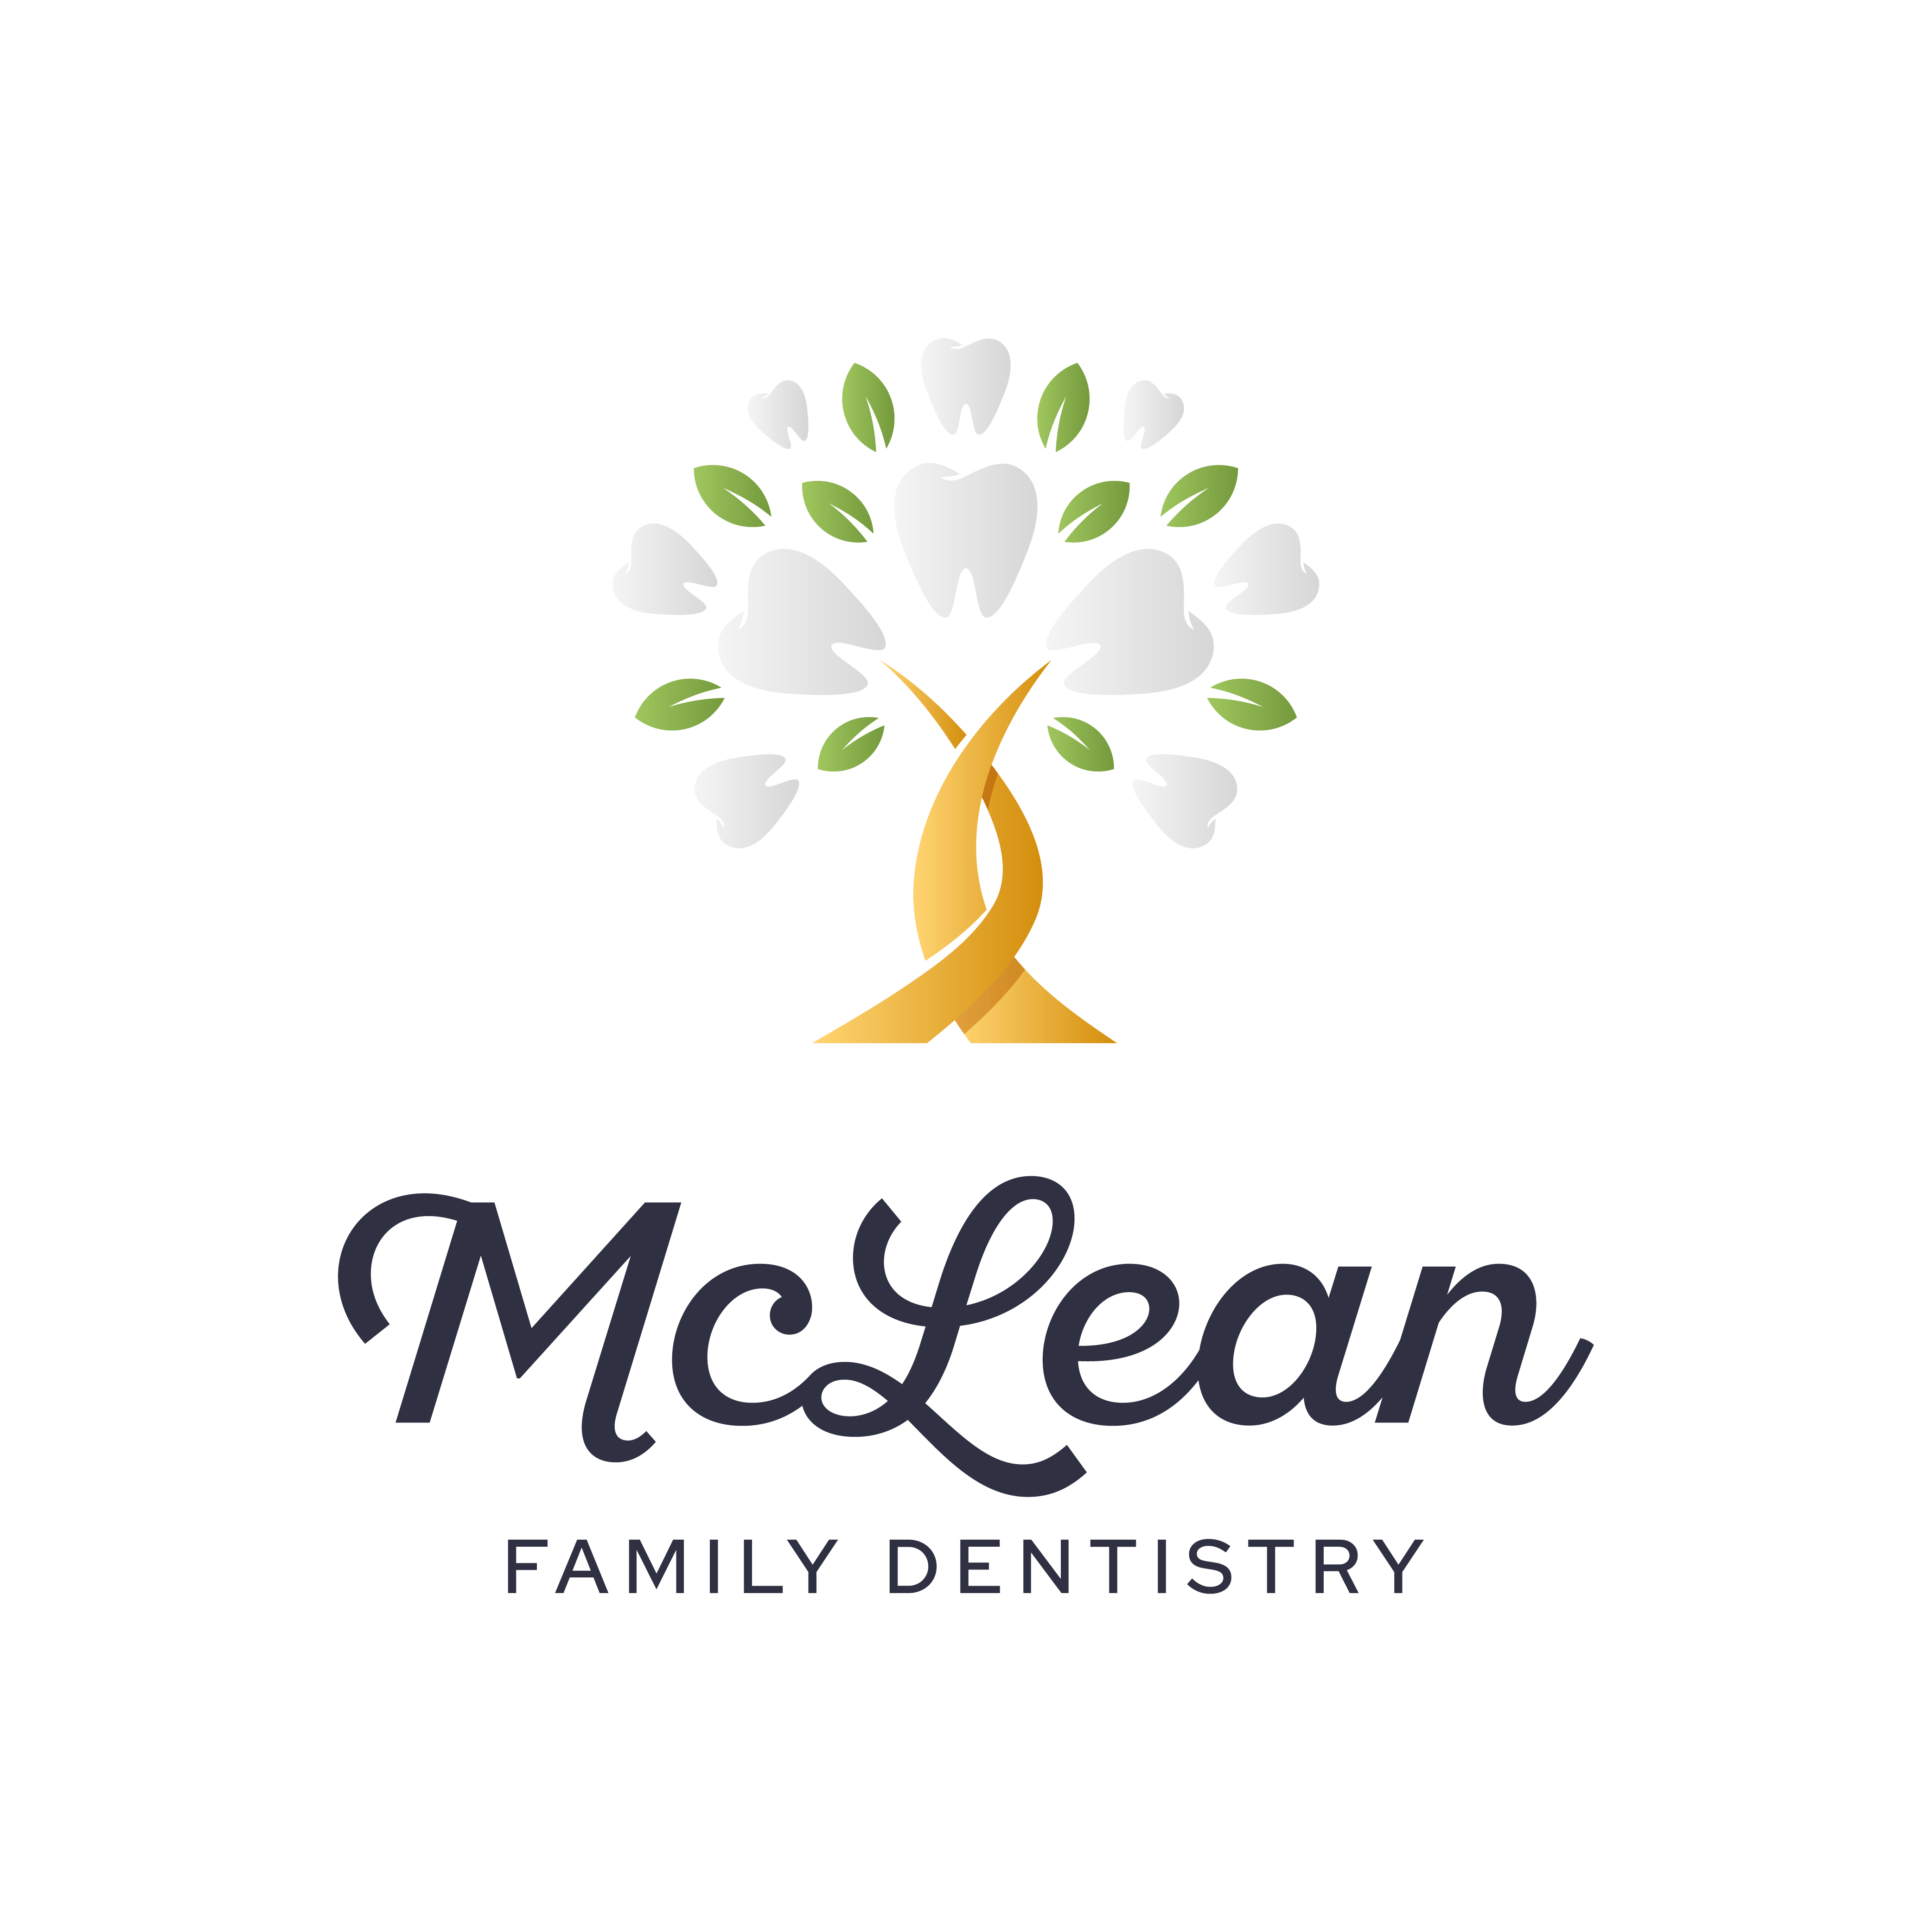 Mclean Family Dentistry